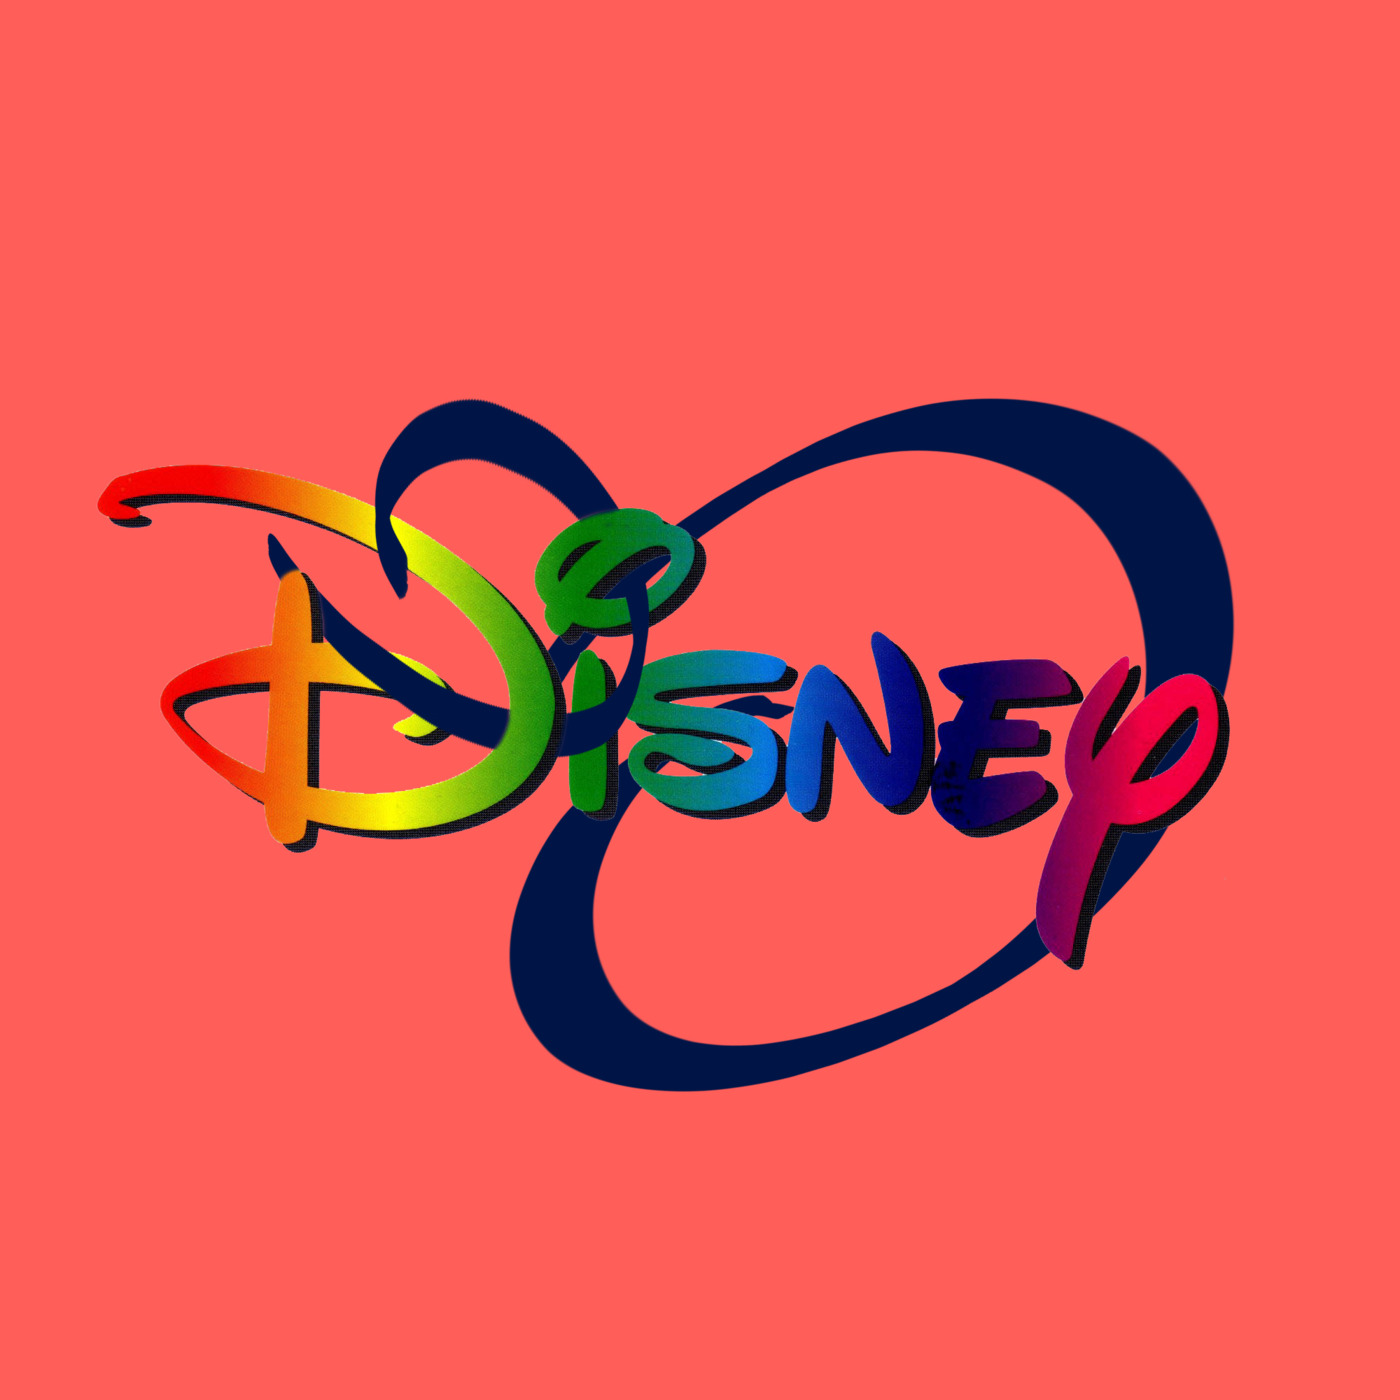 Episode 14: Disney